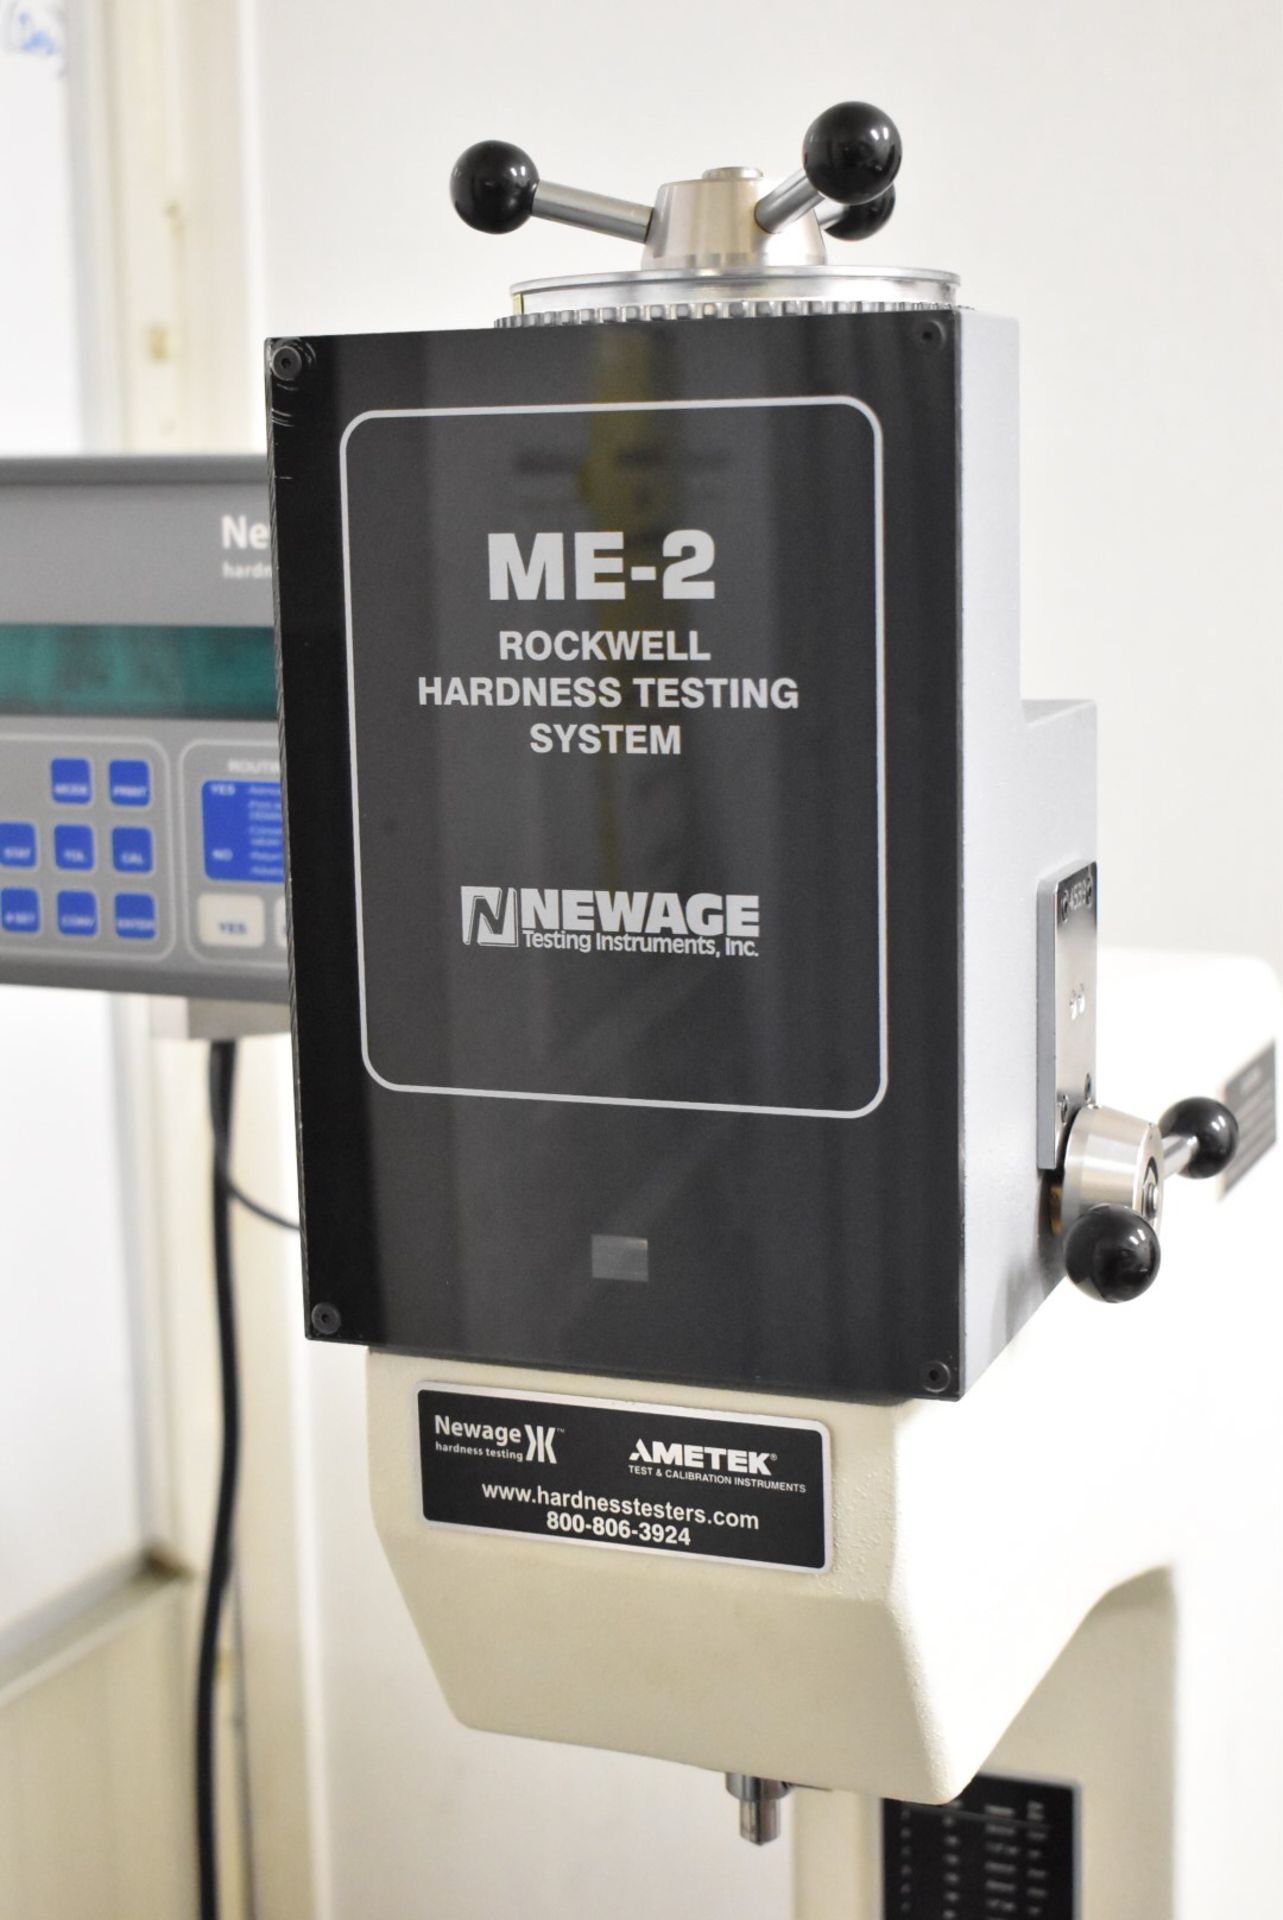 NEWAGE ME-2RDS ROCKWELL HARDNESS TESTING SYSTEM WITH AMETEK CONTROL, 115V/1PH/50-60HZ, S/N 4539 [ - Image 2 of 7